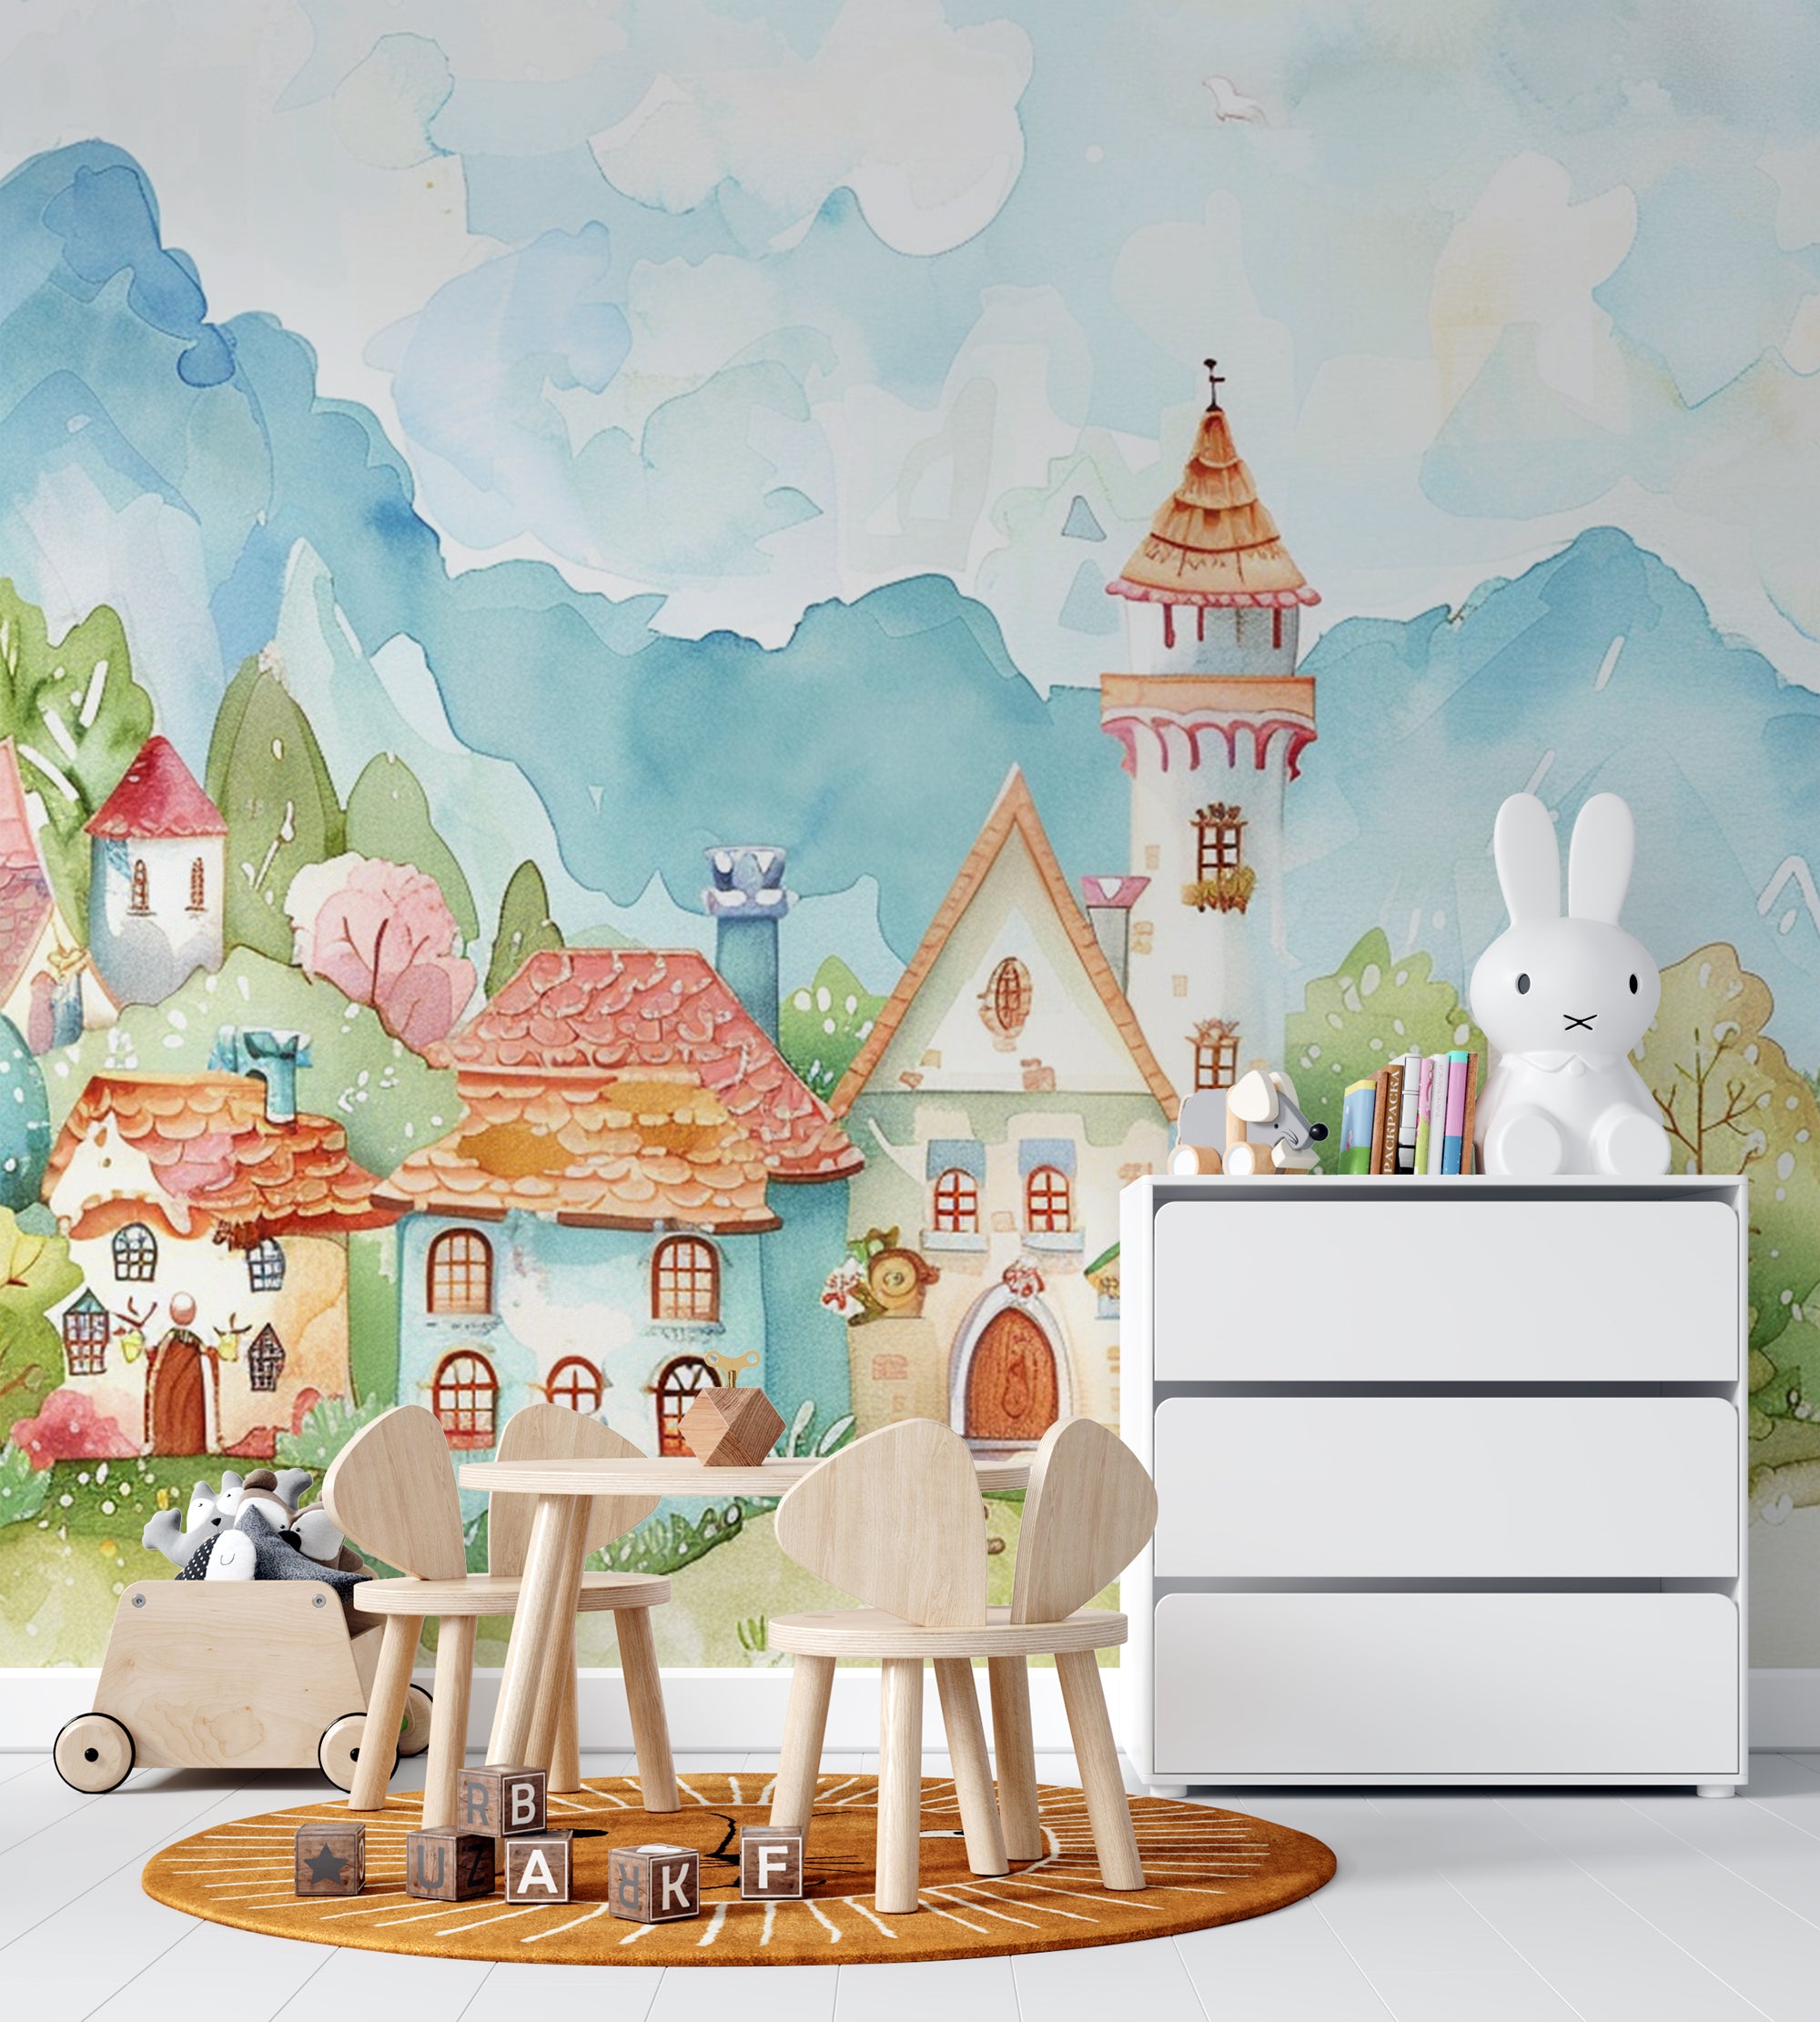 Imaginary Escape: Fantasy Village Wallpaper für Kinder